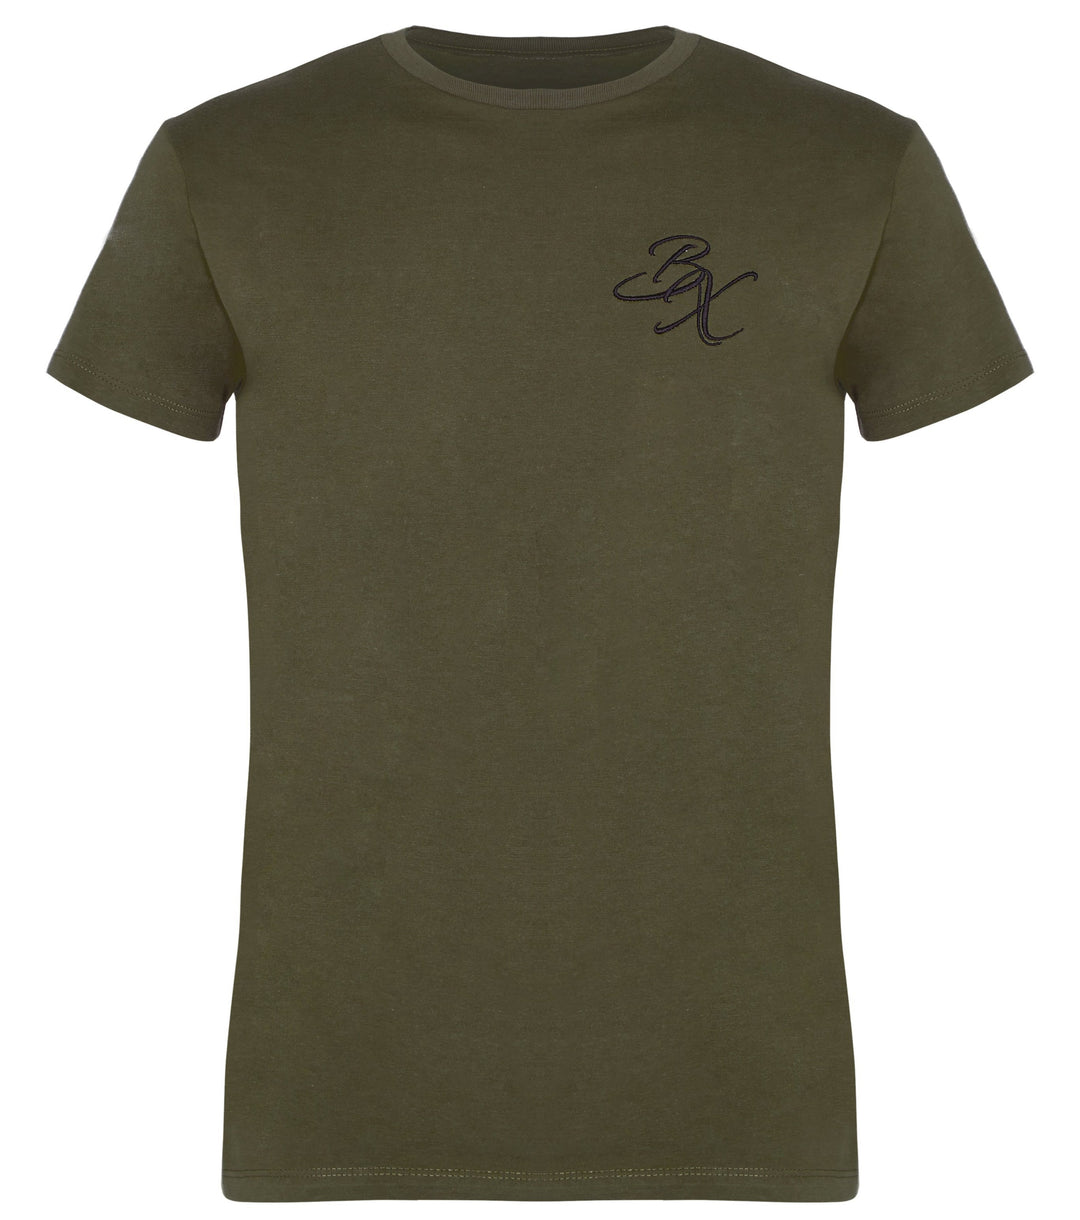 BX Original Slim Fit T-shirt - Khaki - Adapt Avenue